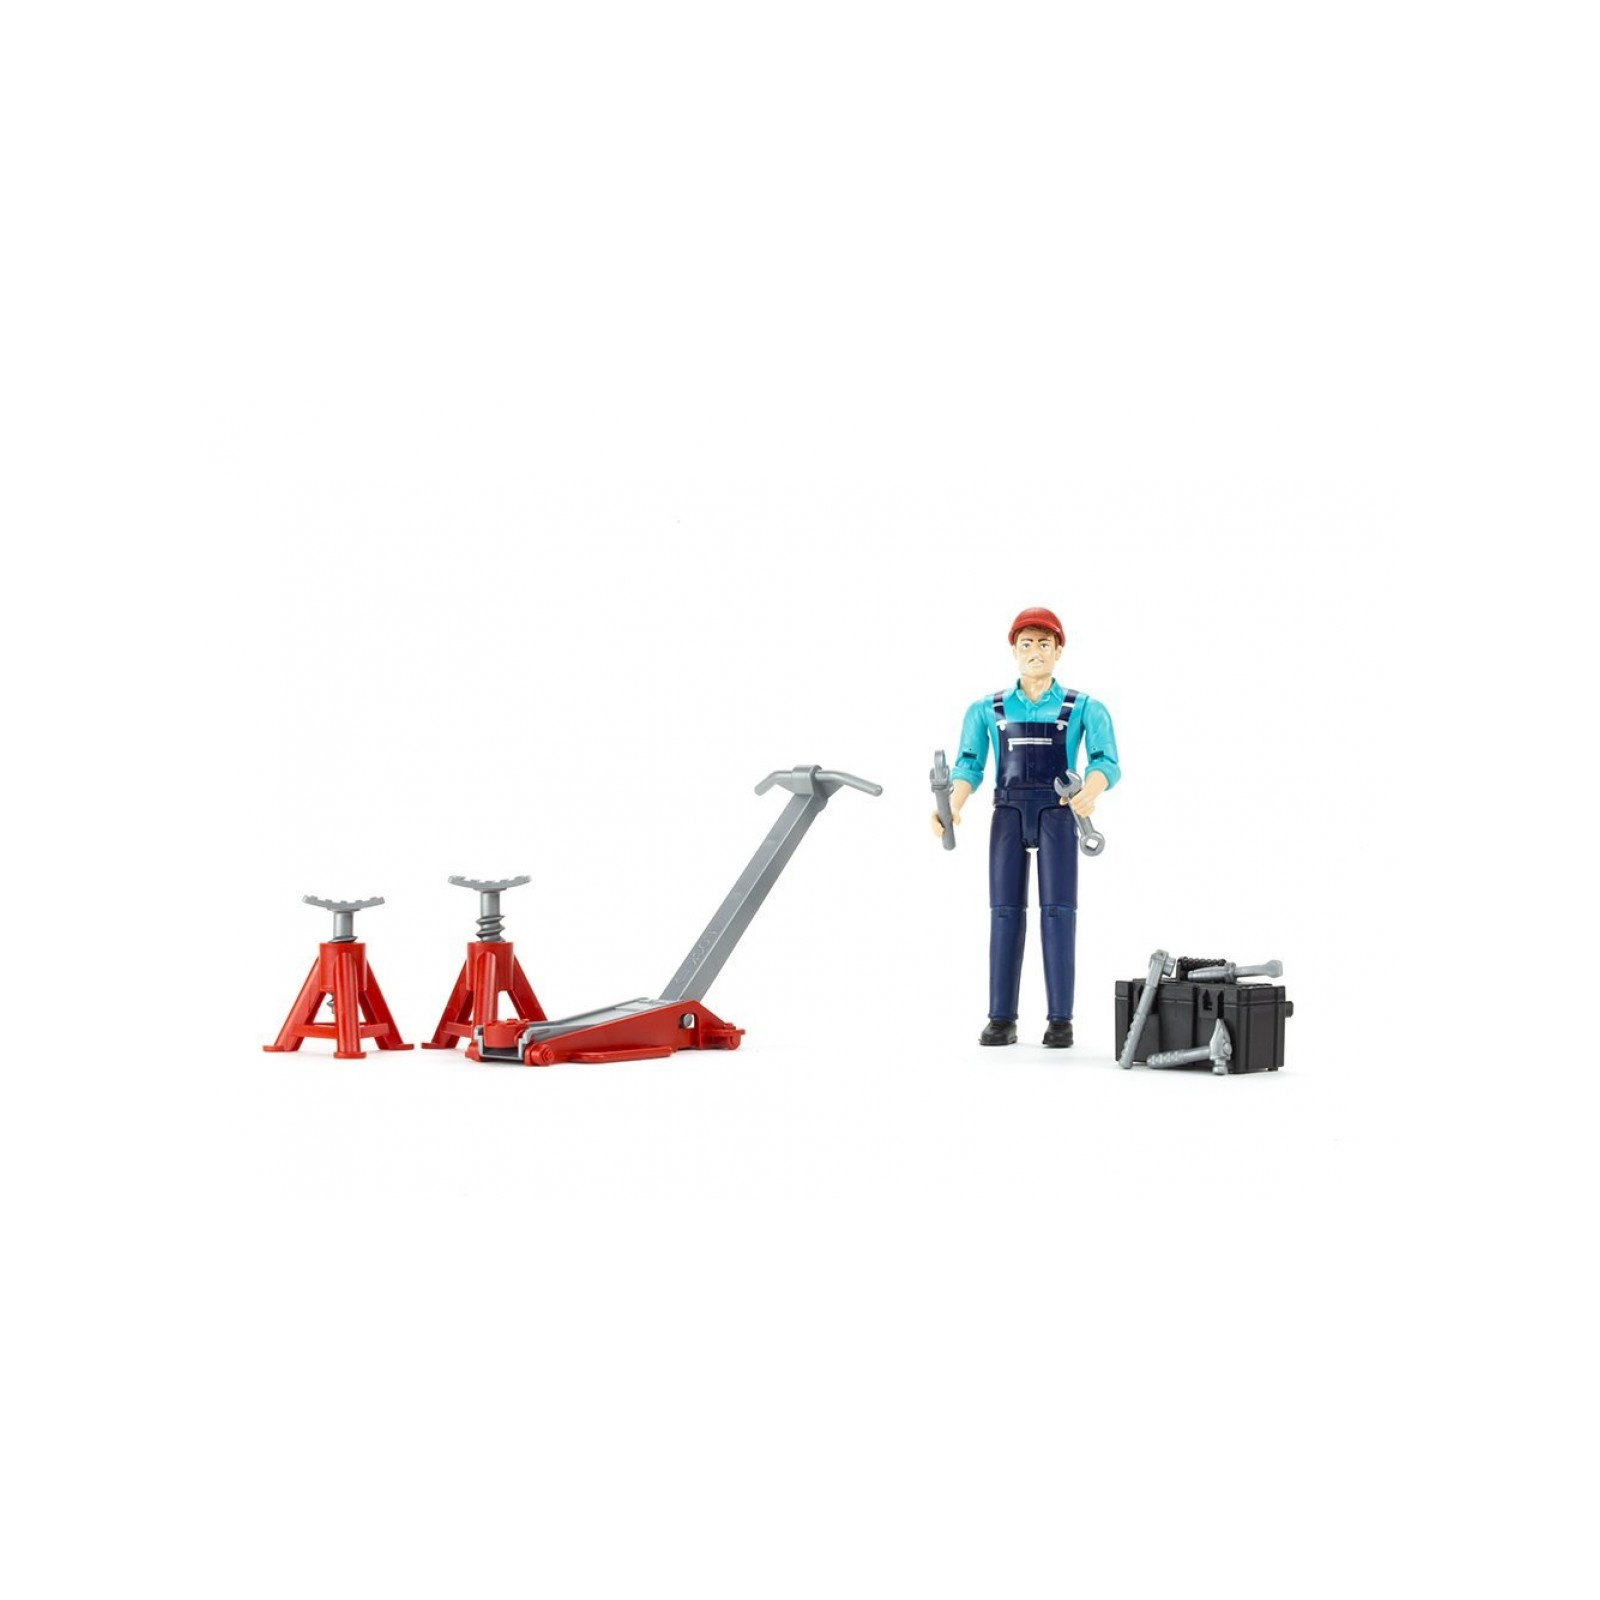 Фігурка Bruder фігурка автомеханіка з інструментами (62100) зображення 2